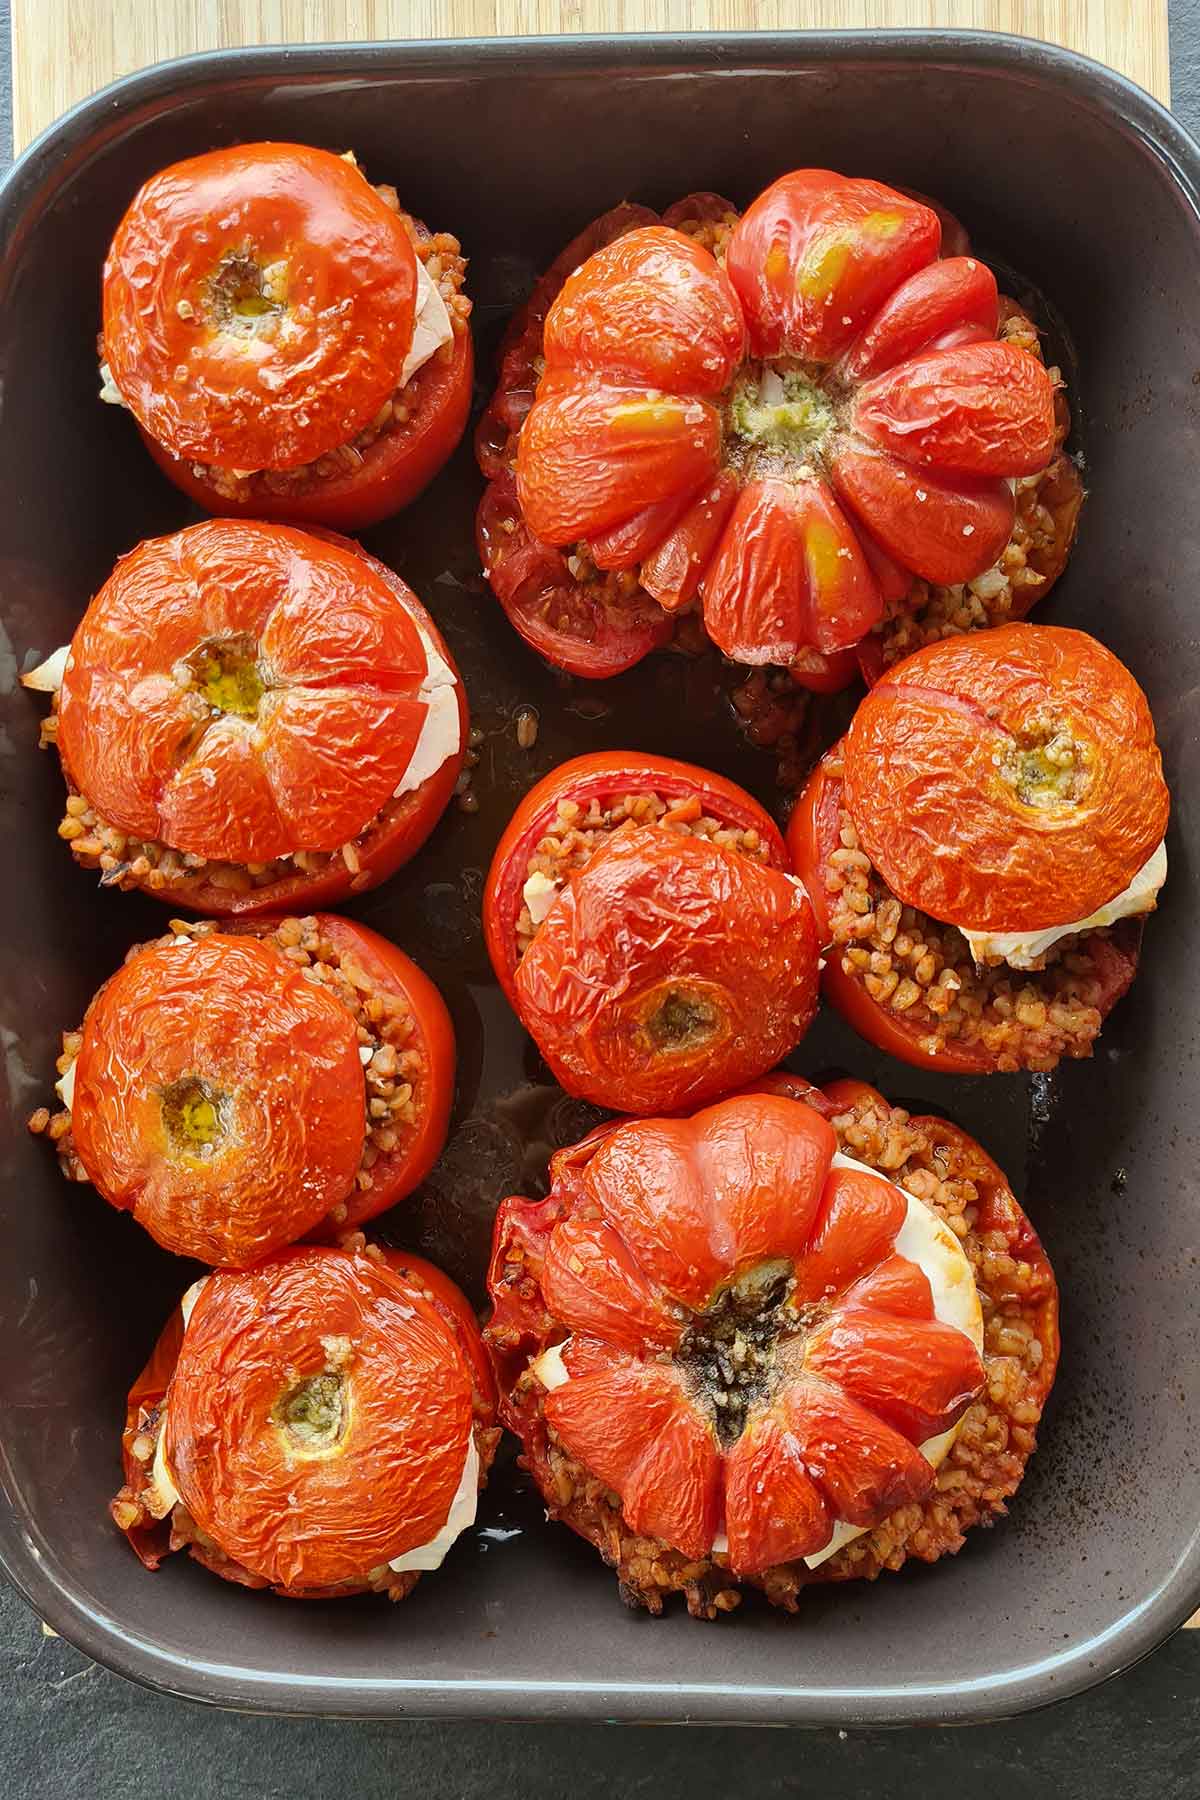 stuffed tomatoes with bulgur and feta cheese